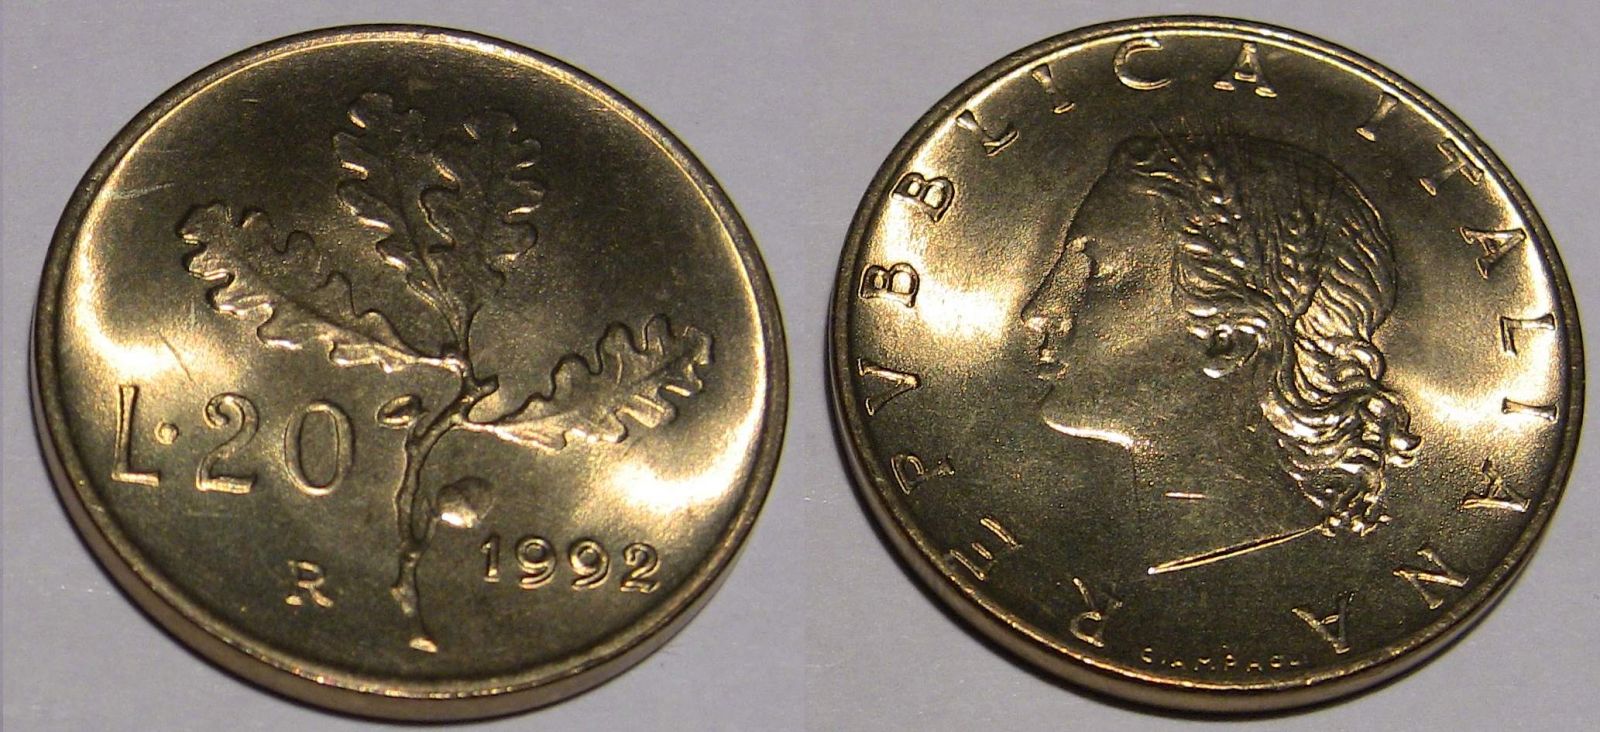 20 lire 1992